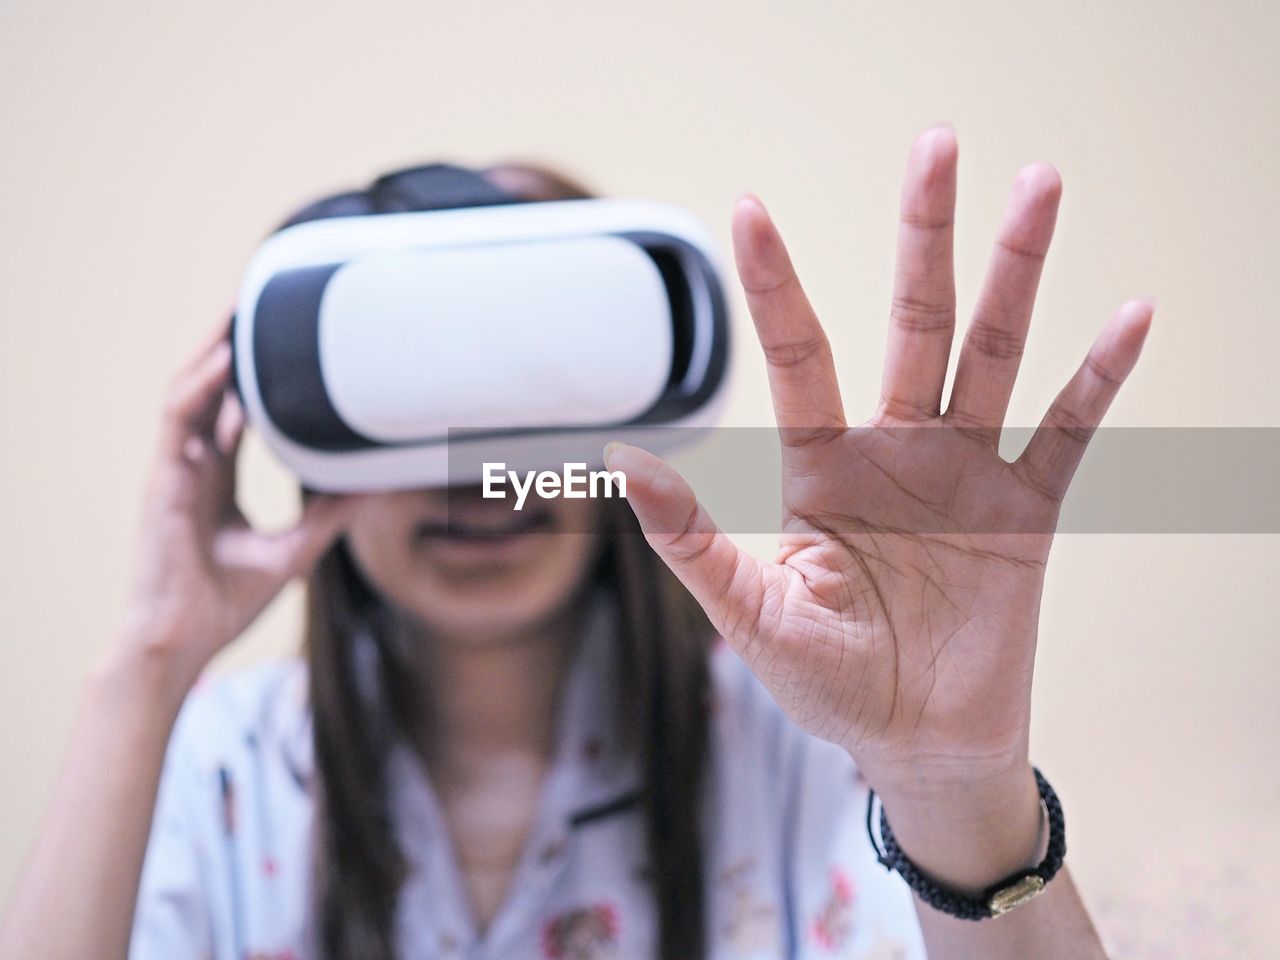 Woman gesturing while using virtual reality simulator